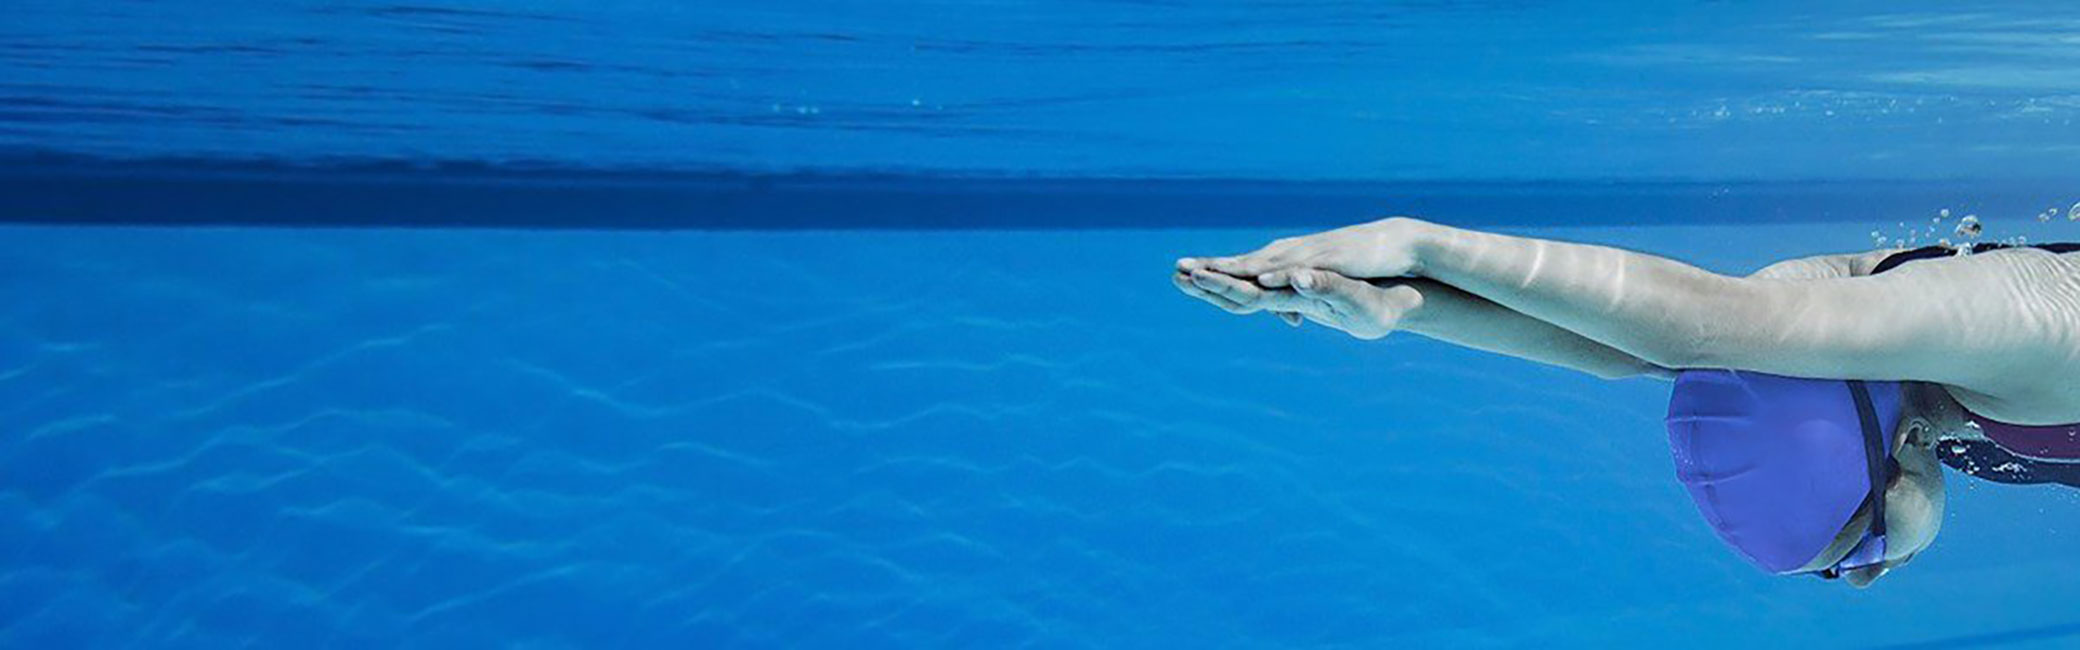 Aquatics swimmer in pool